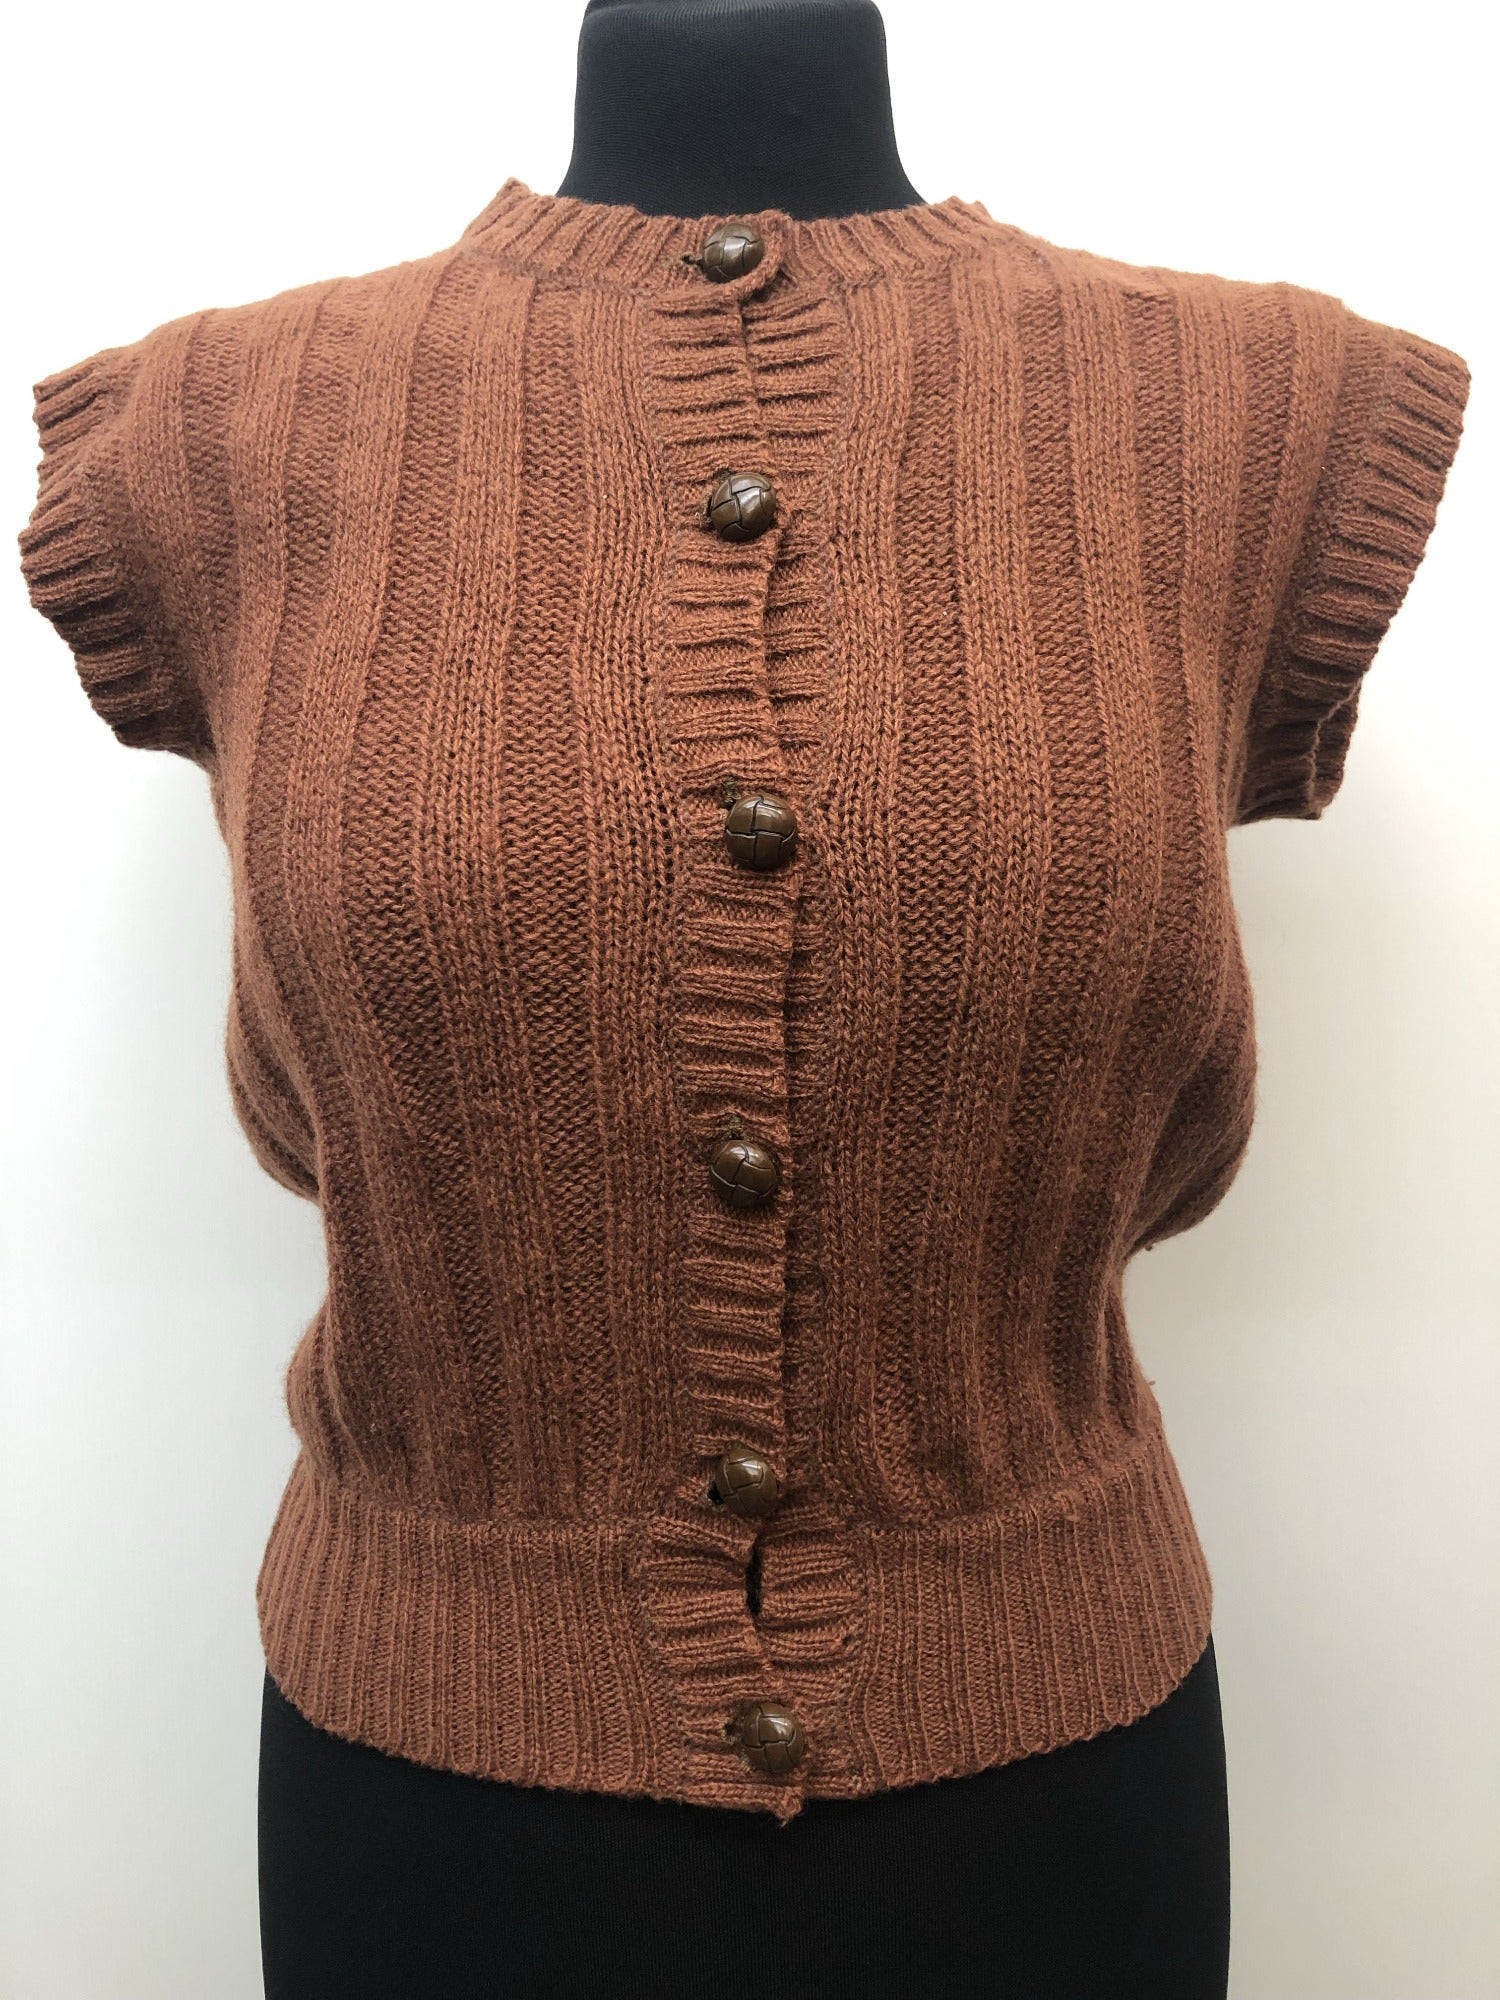 Workwear  womens  vest  Urban Village Vintage  Tank Top  sweater  Size Large  Jeffrey Rogers  cardigan  cap sleeve  brown  8  70s  1970s